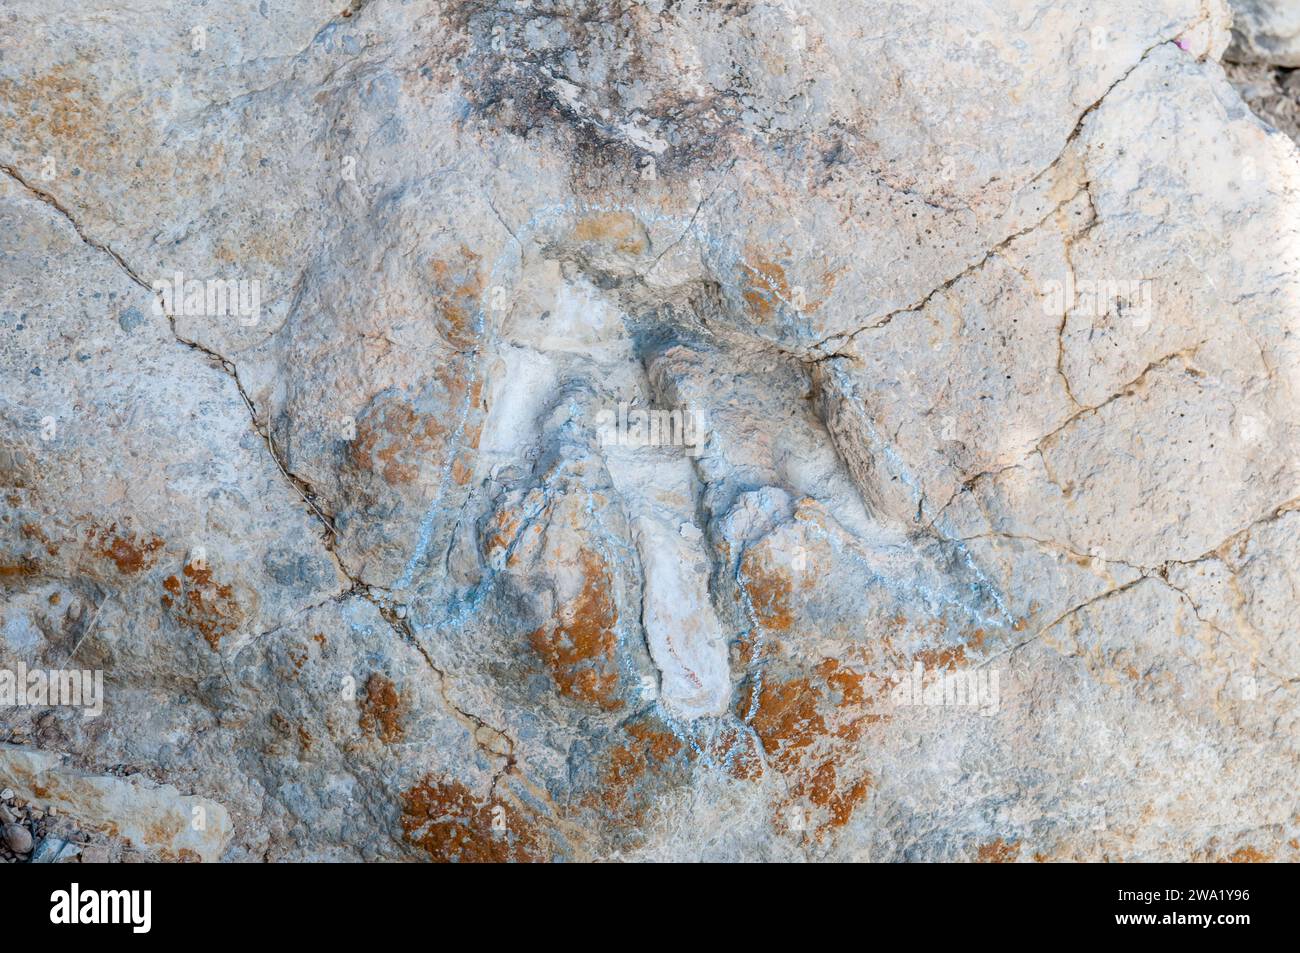 fossil track, Paleontological sites of vertebrates from the Early Cretaceous, Villanueva de Huerva, Aragon, Spain Stock Photo